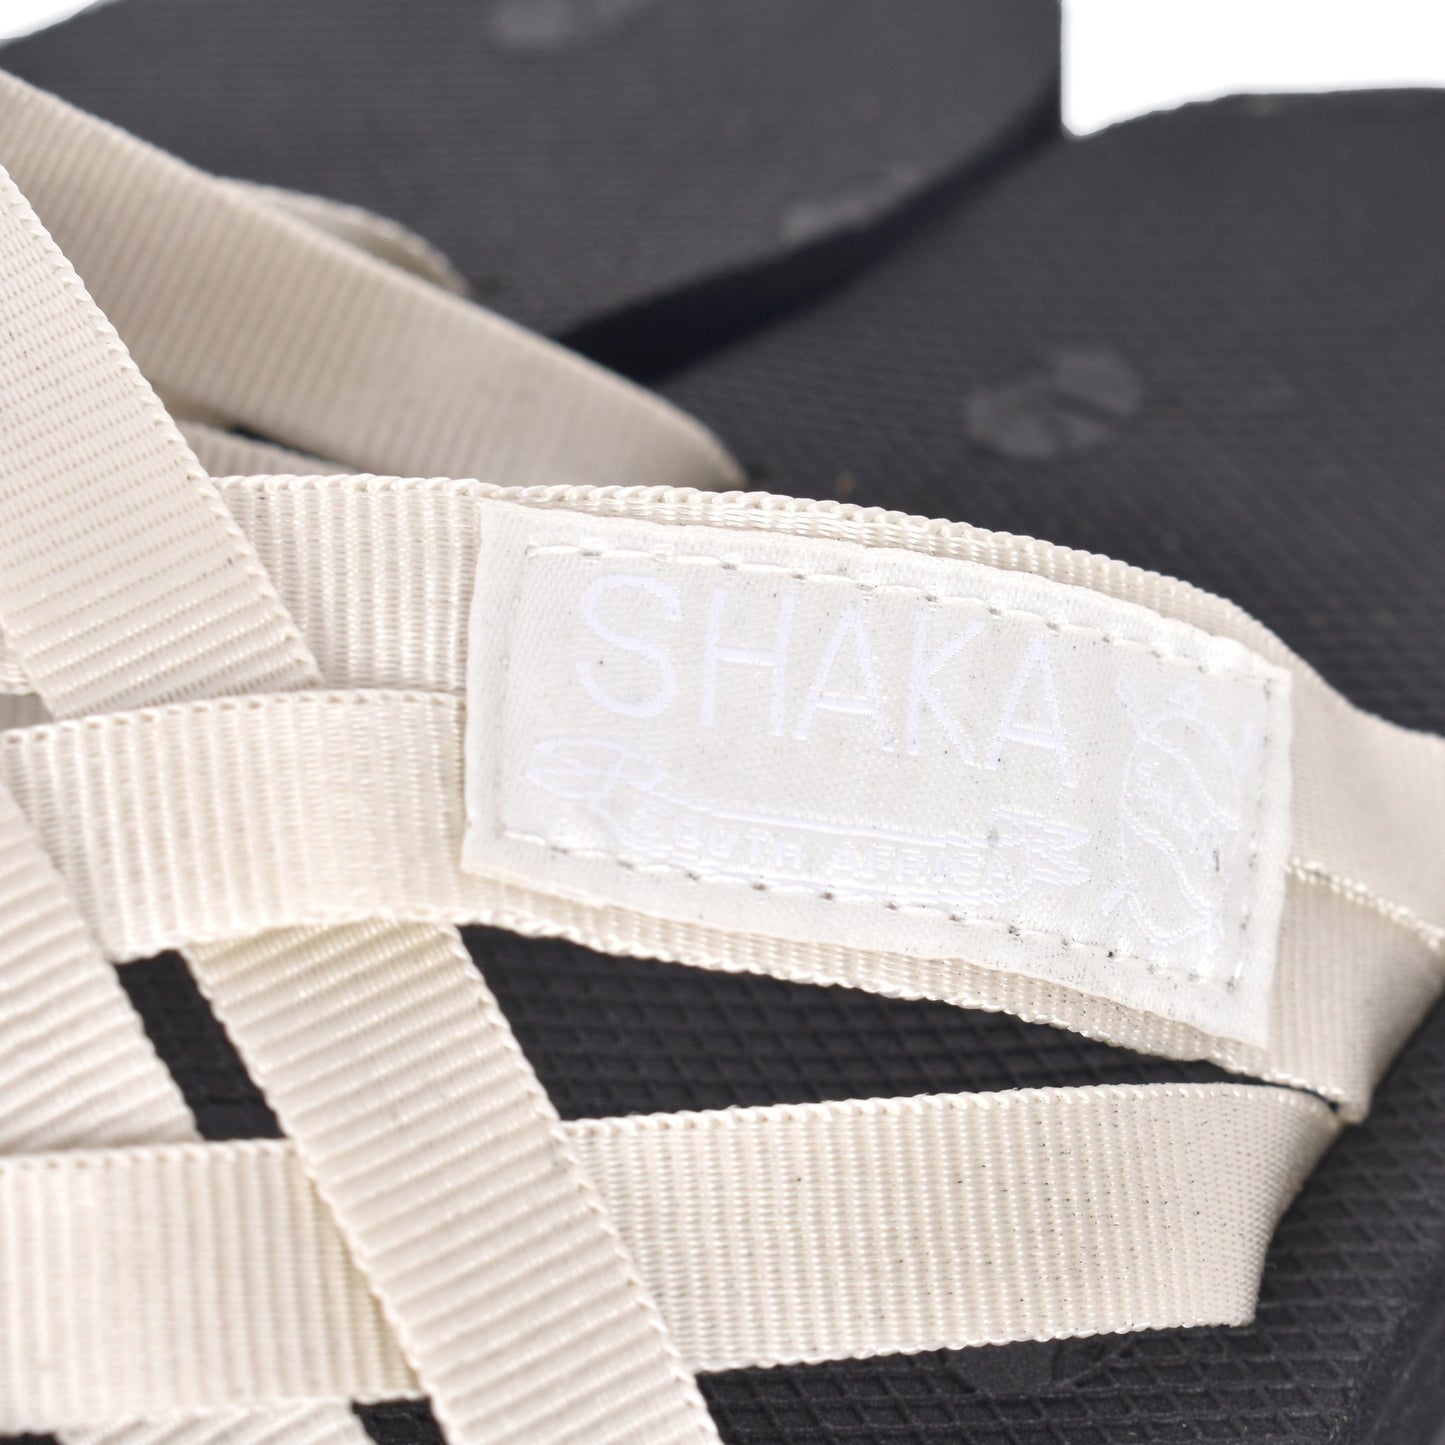 SHAKA スポーツサンダル LOS CABOS [メンズ/レディース] [春夏] 433151 - SHAKA(シャカ)公式オンラインストア